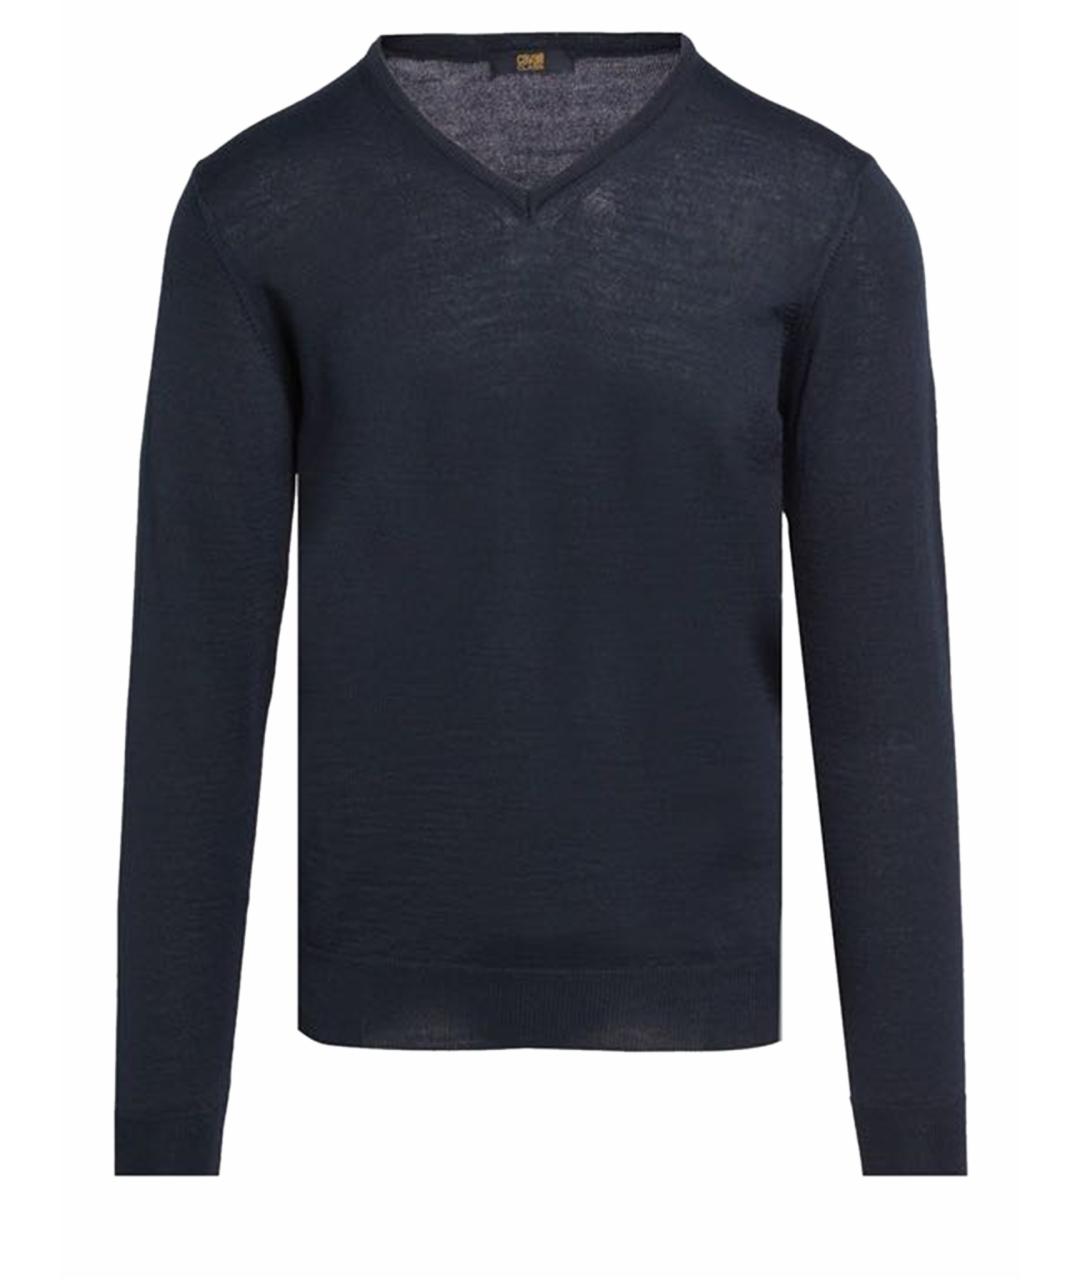 CAVALLI CLASS Темно-синий шерстяной джемпер / свитер, фото 1